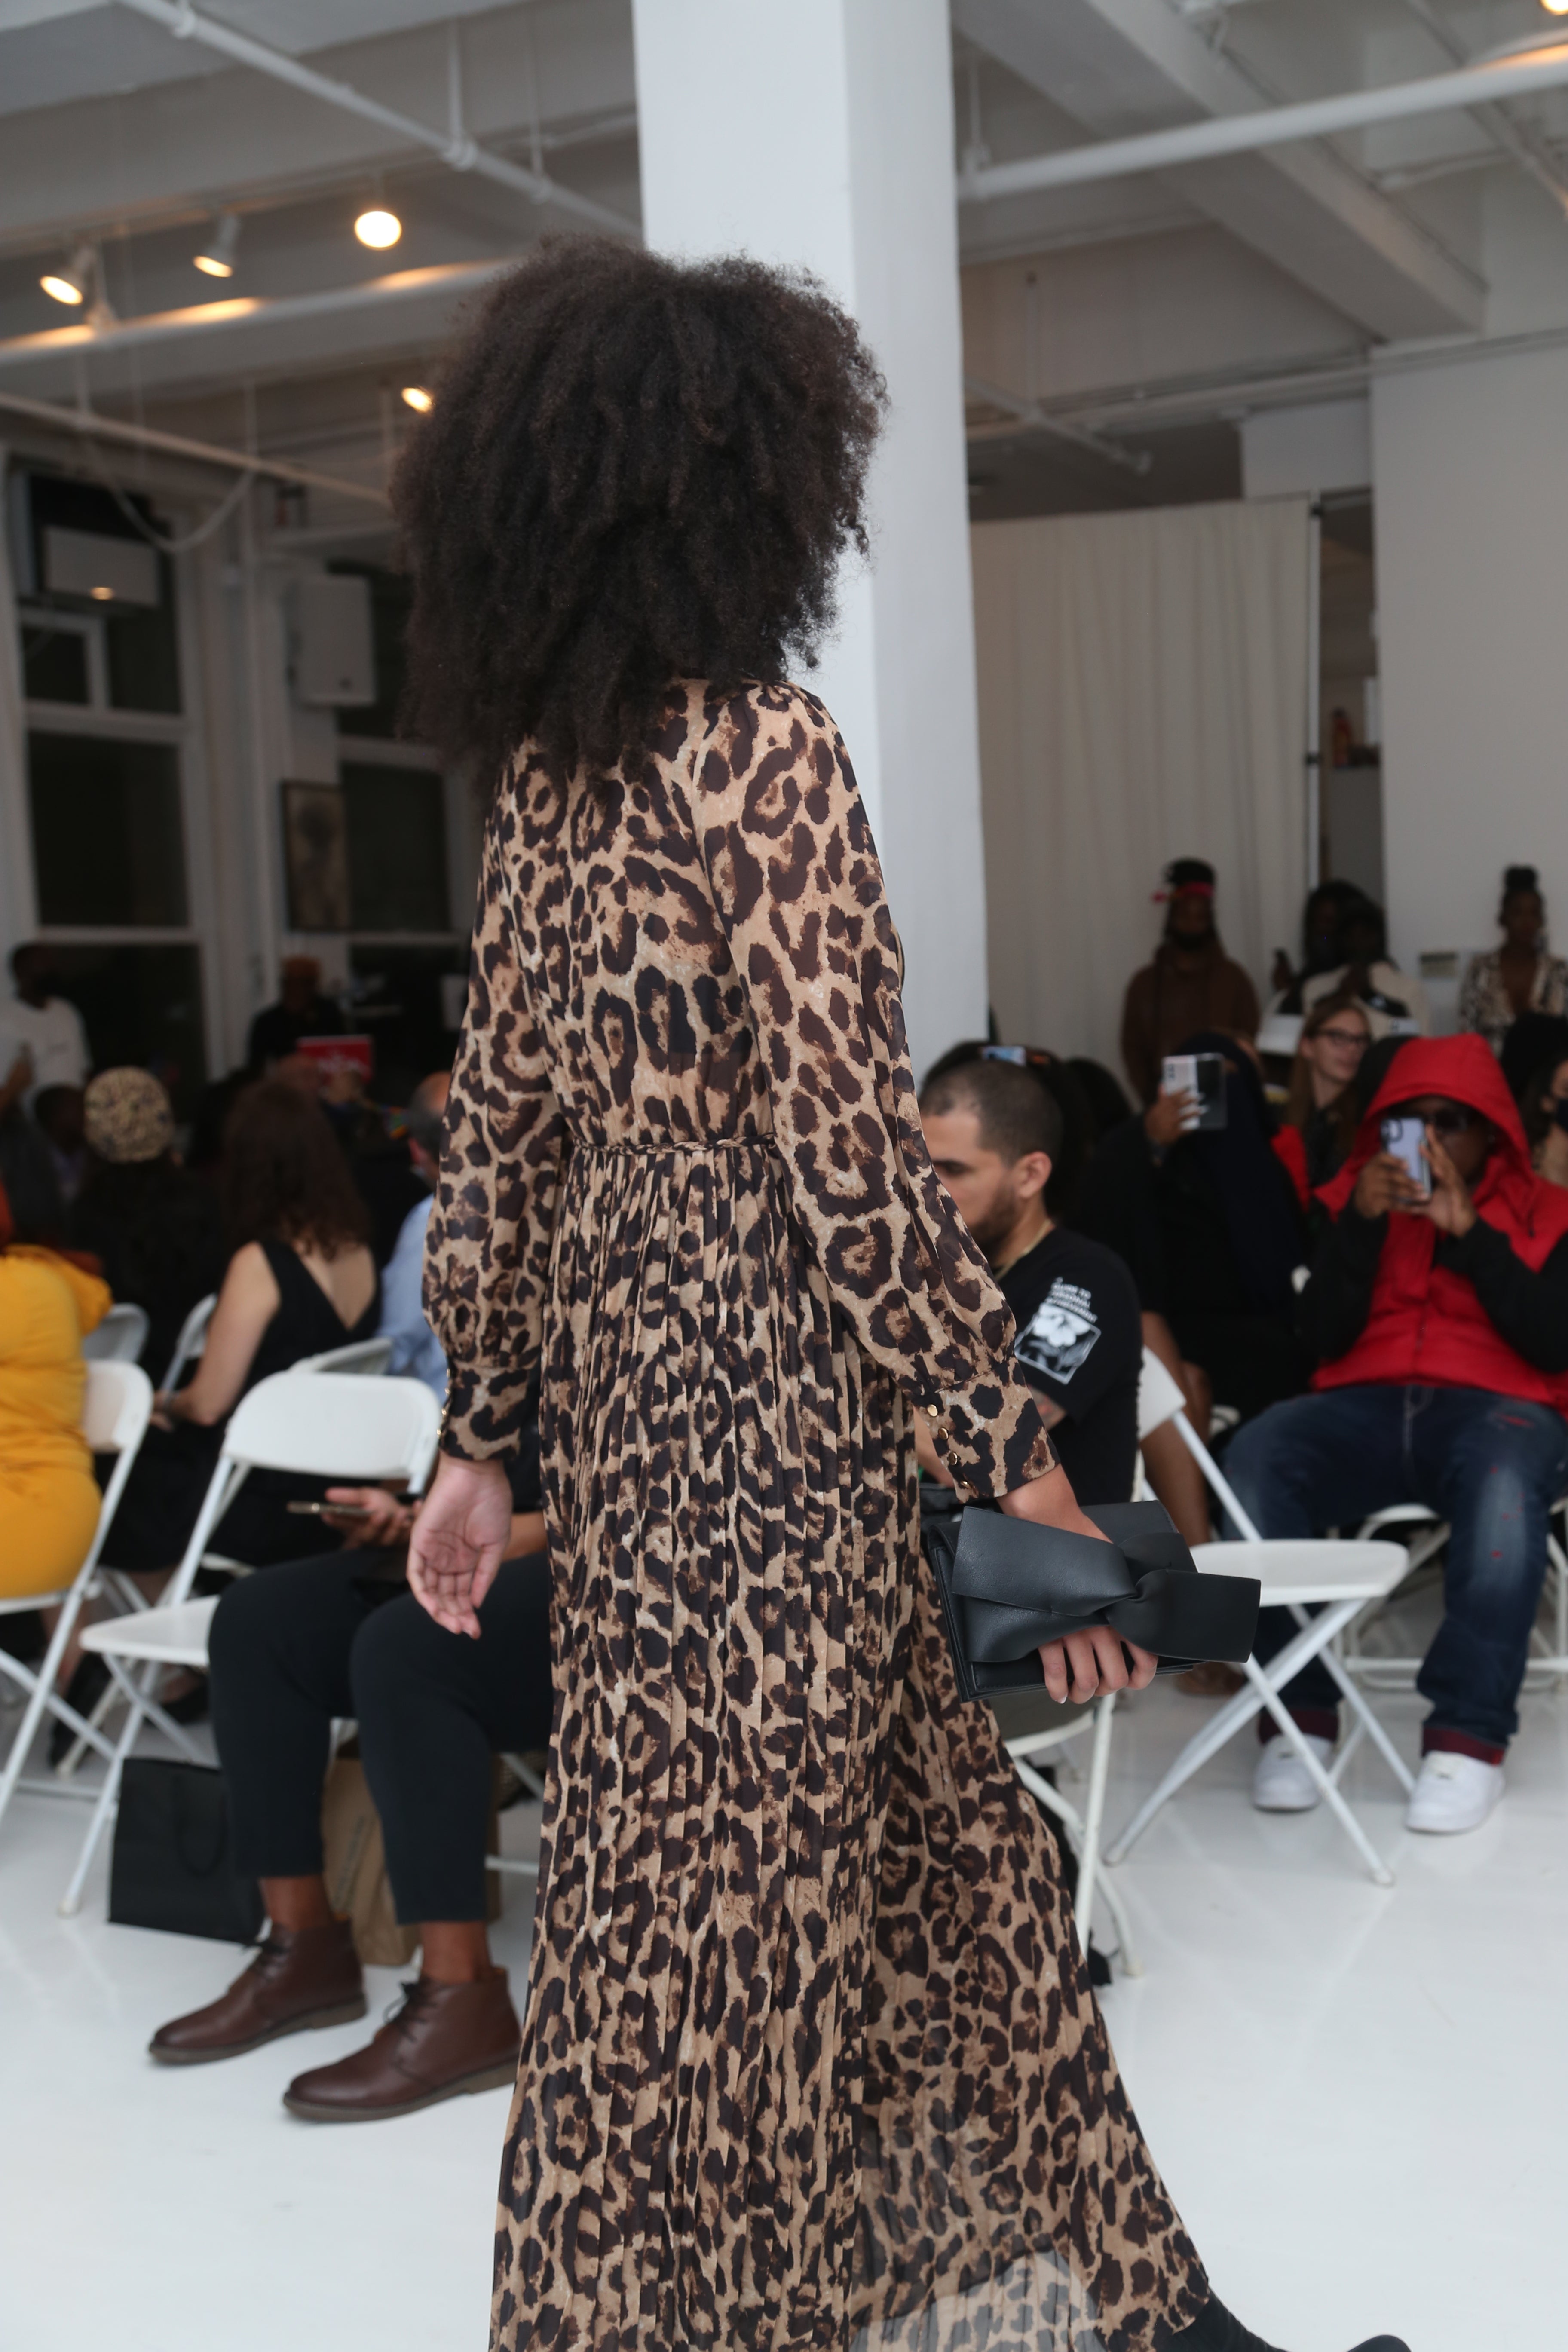 Leopard  Sensation|Leopard Dress